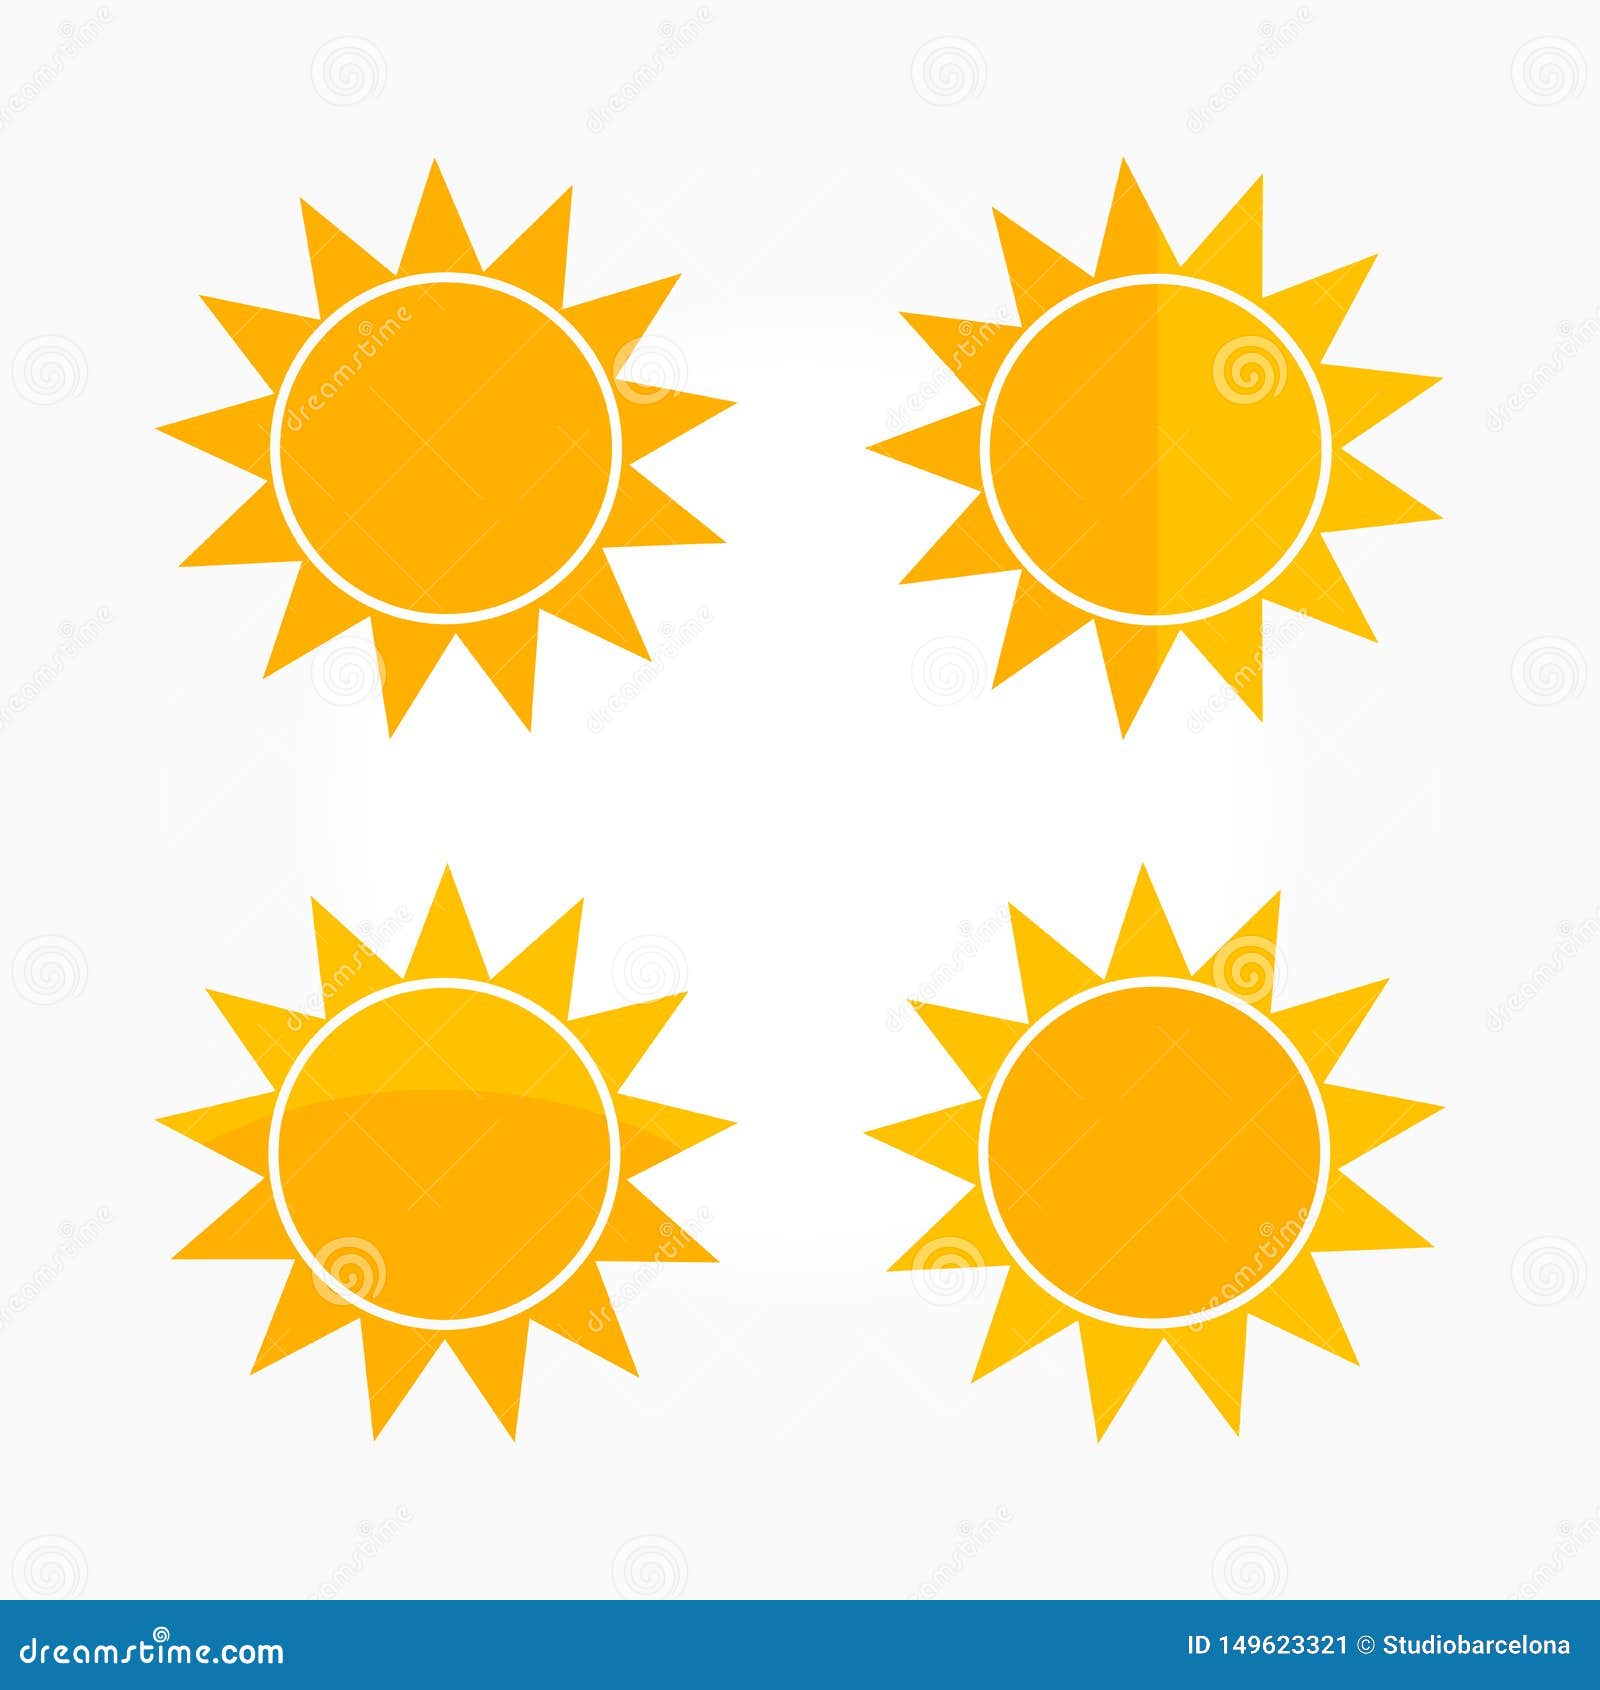 Flat design sun icons stock vector. Illustration of design - 149623321